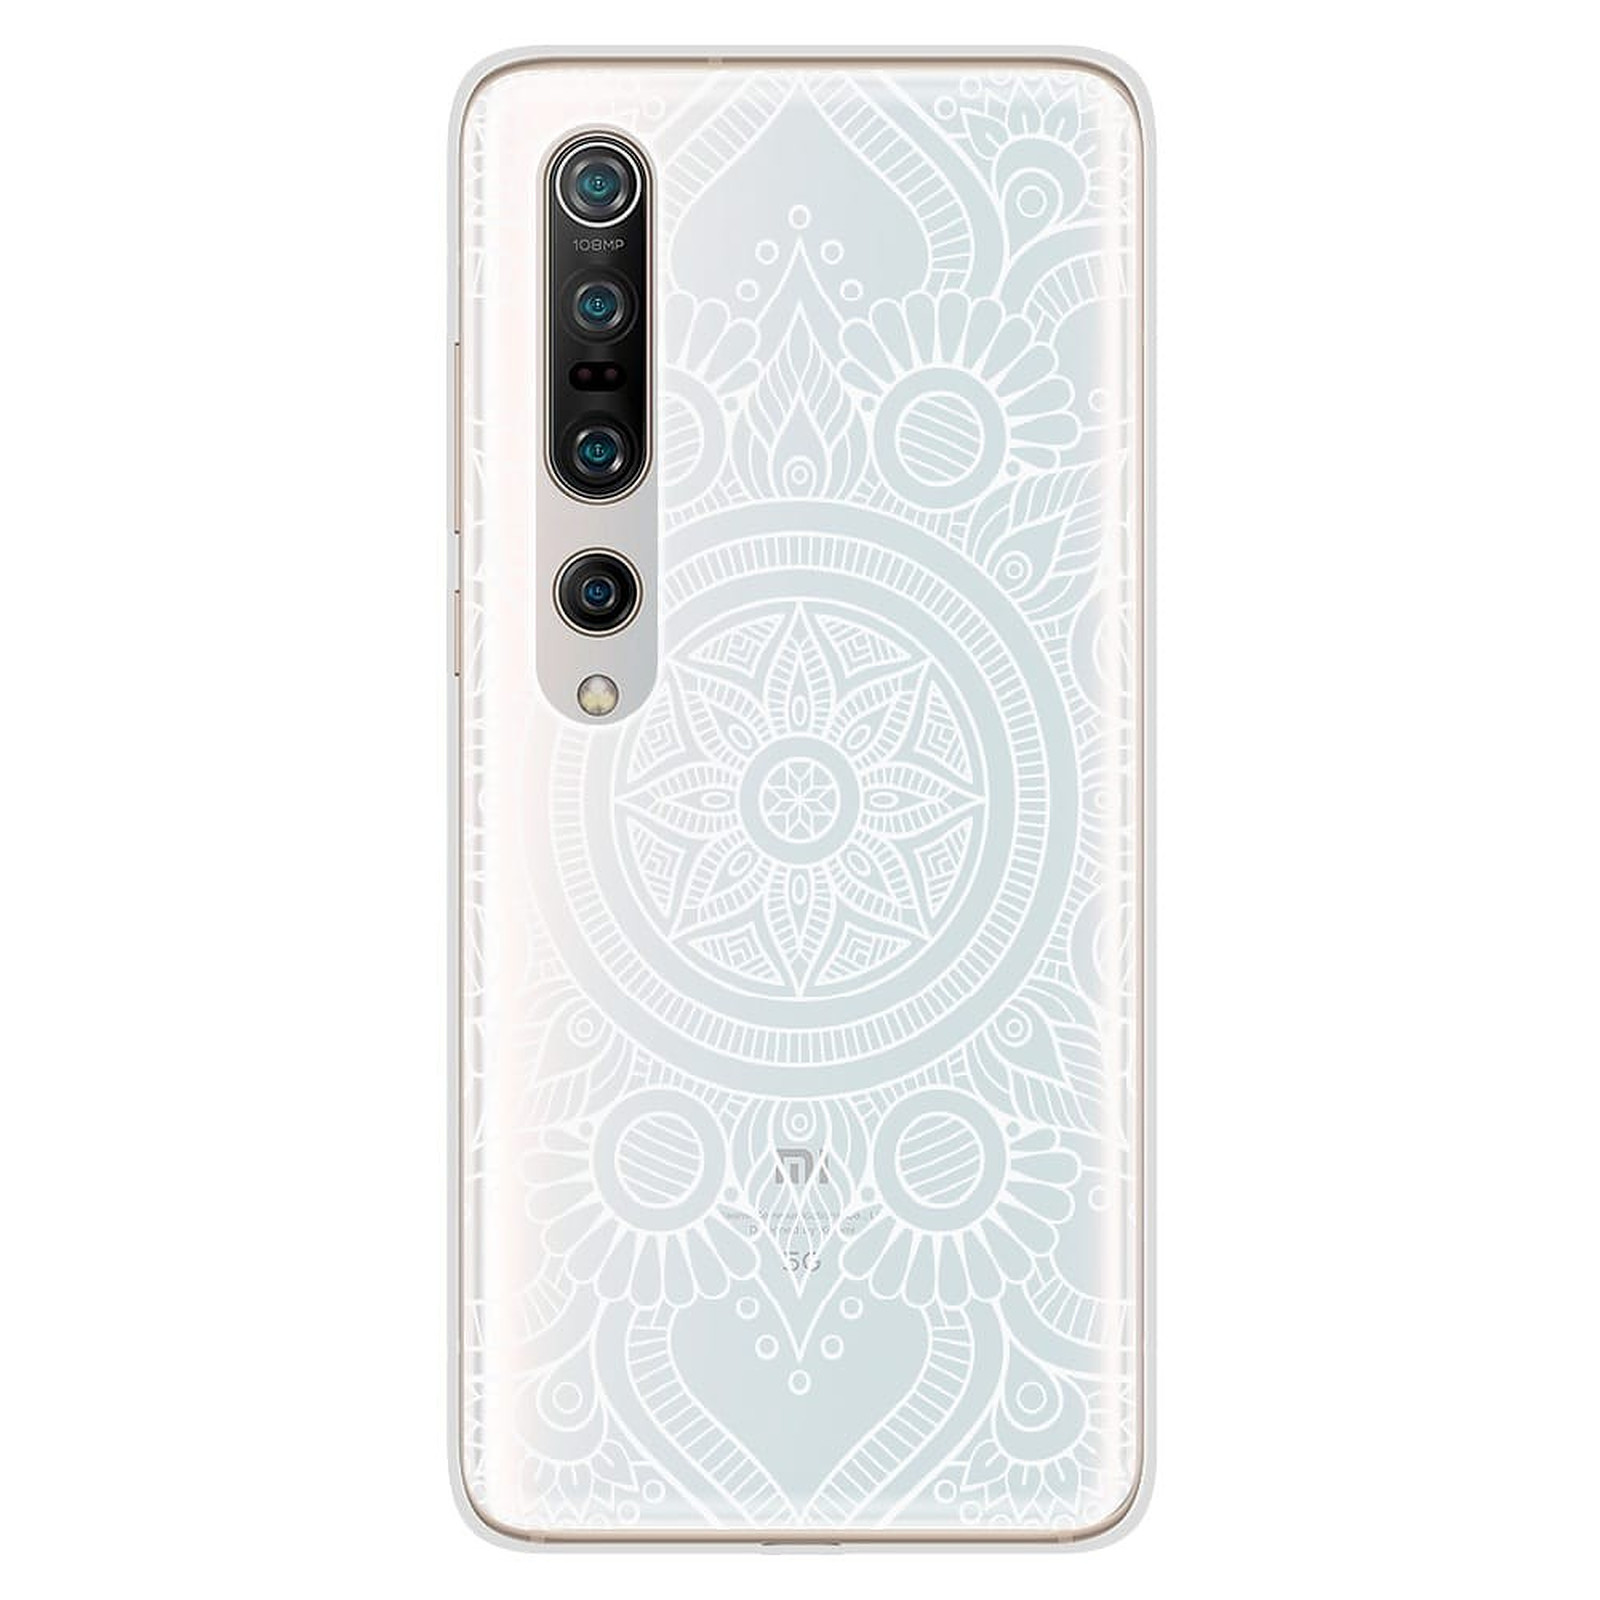 1001 Coques Coque silicone gel Xiaomi Mi 10 / Mi 10 Pro motif Mandala blanc - Coque telephone 1001Coques